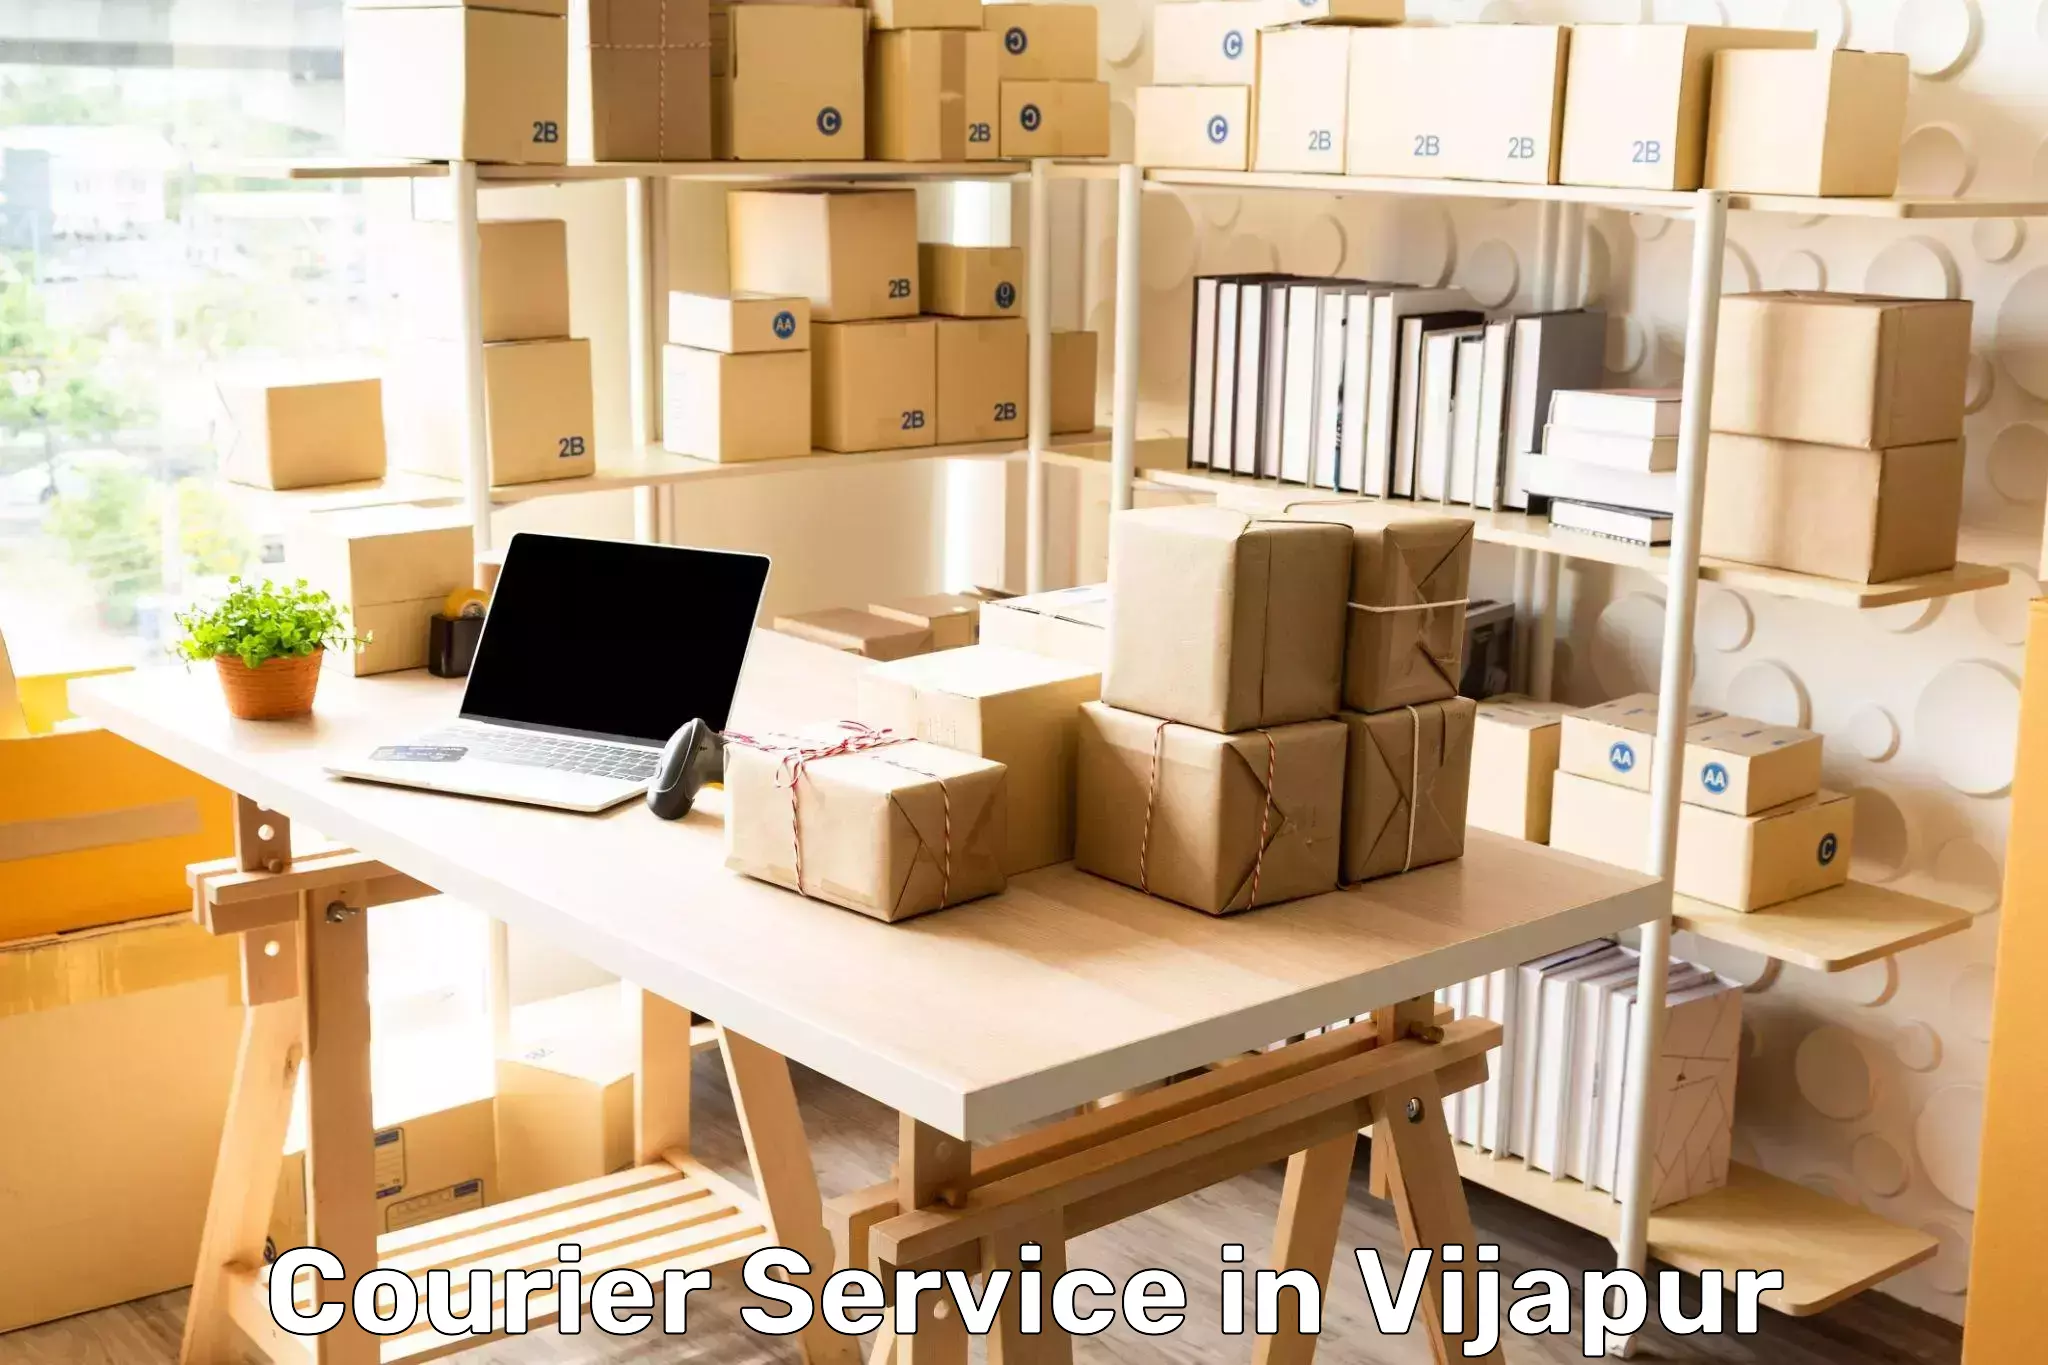 Budget-friendly shipping in Vijapur